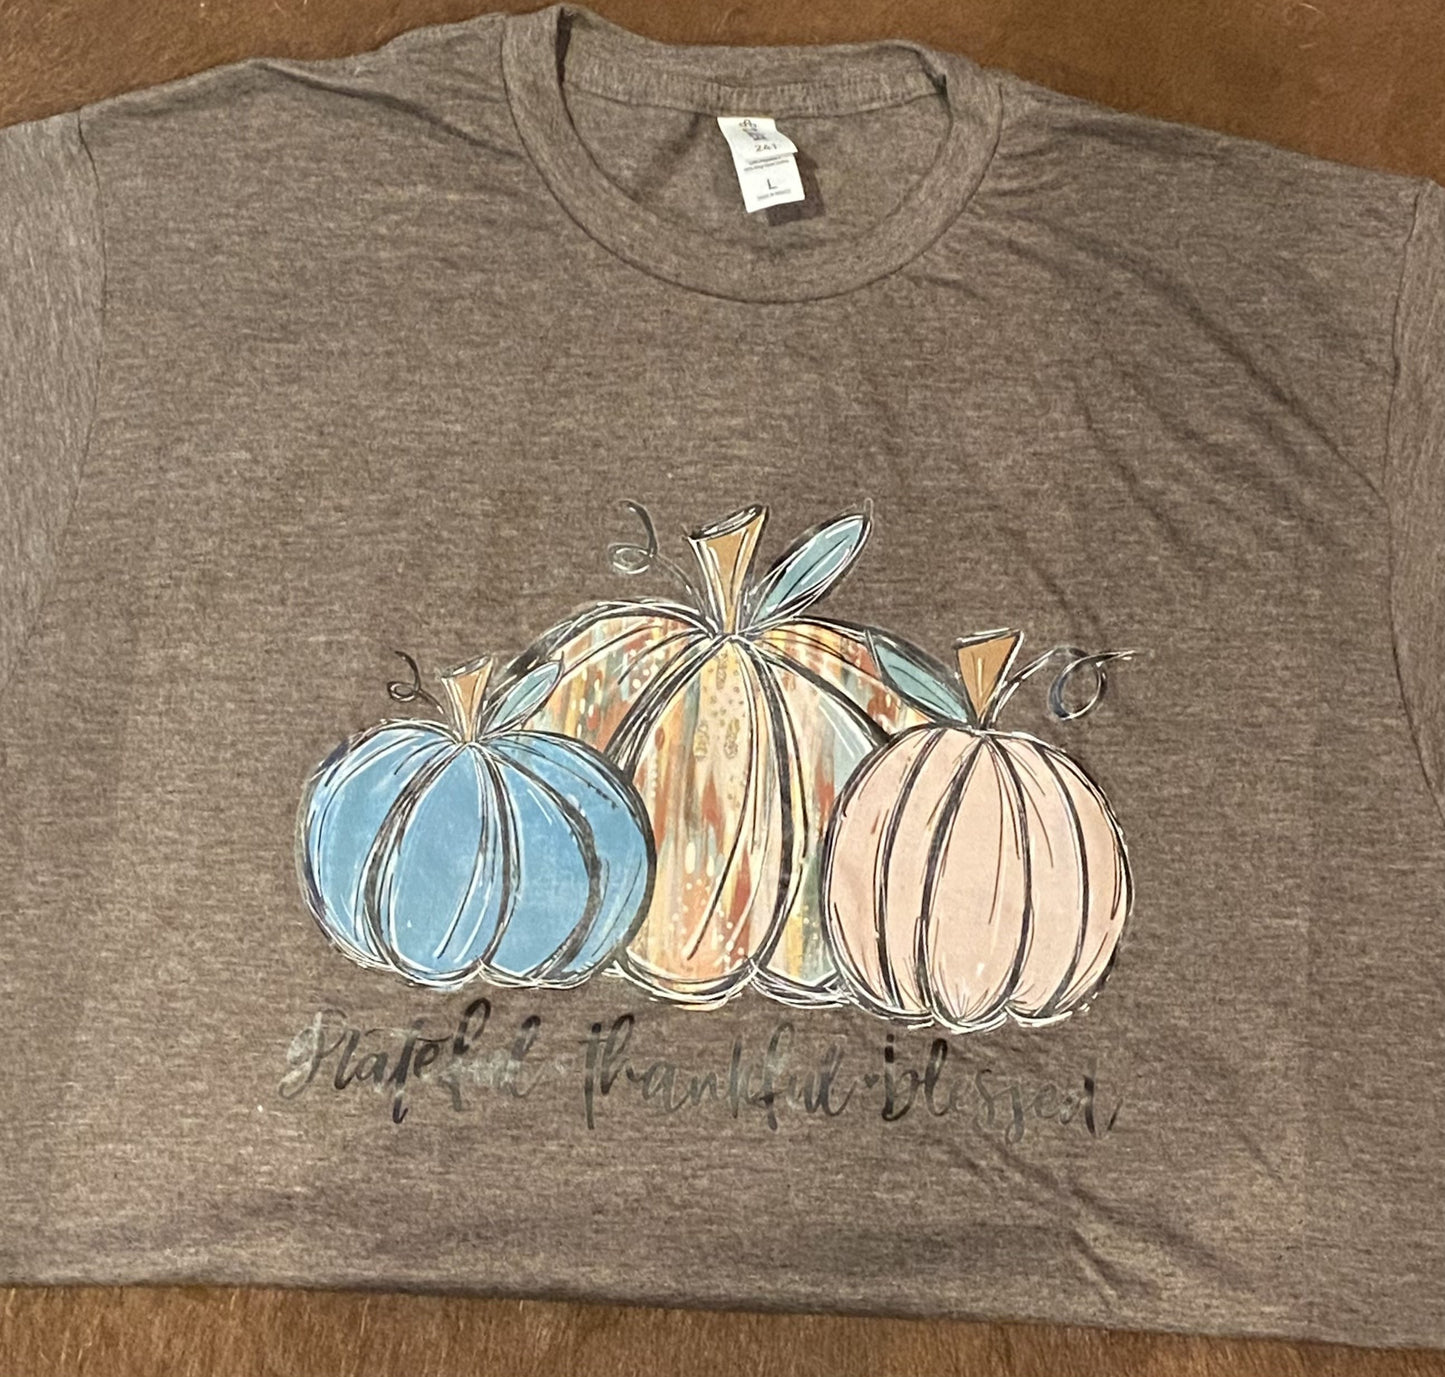 Grateful Thankful Blessed - Pumpkins